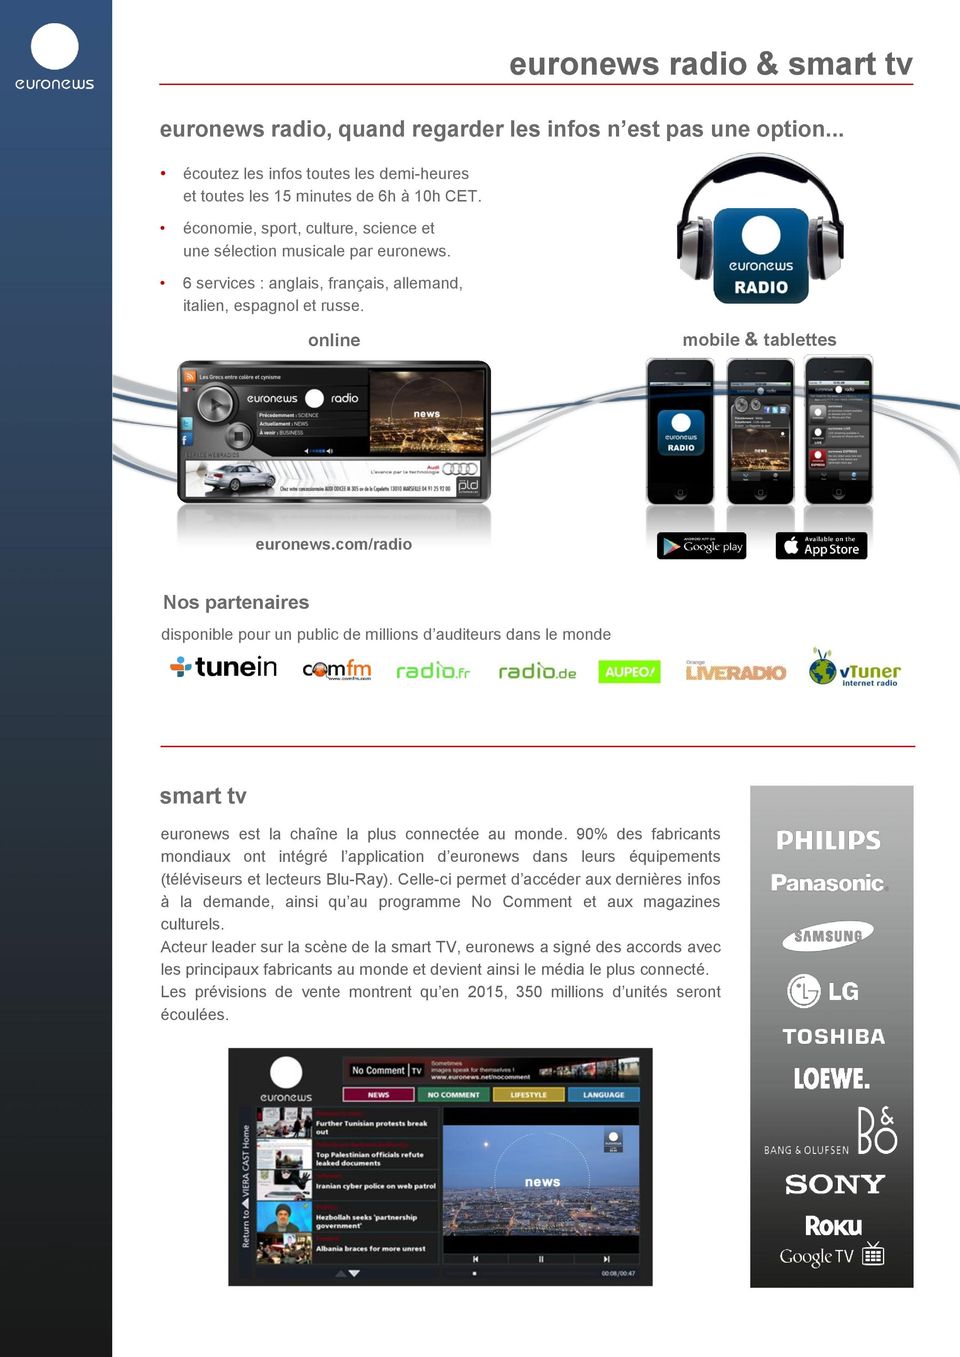 euronews radio & smart tv online mobile & tablettes euronews.